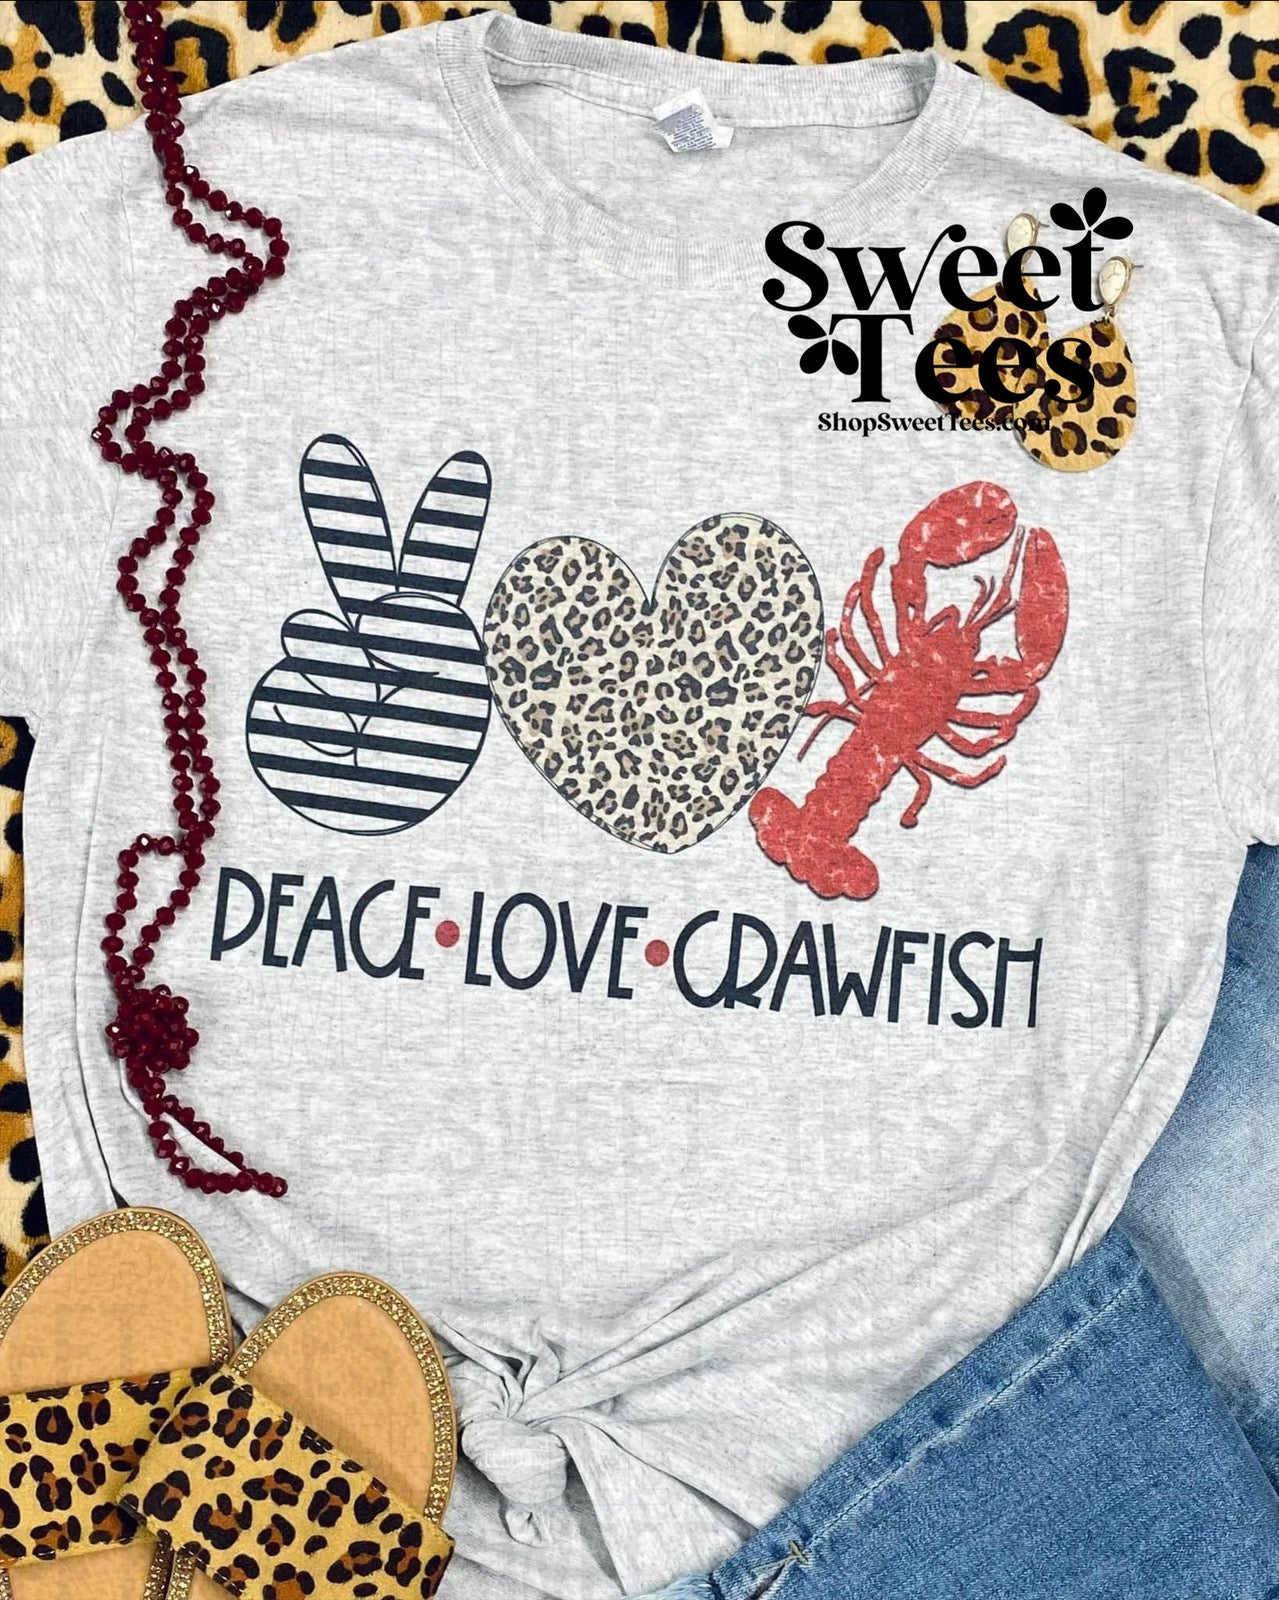 Peace Love Crawfish tee